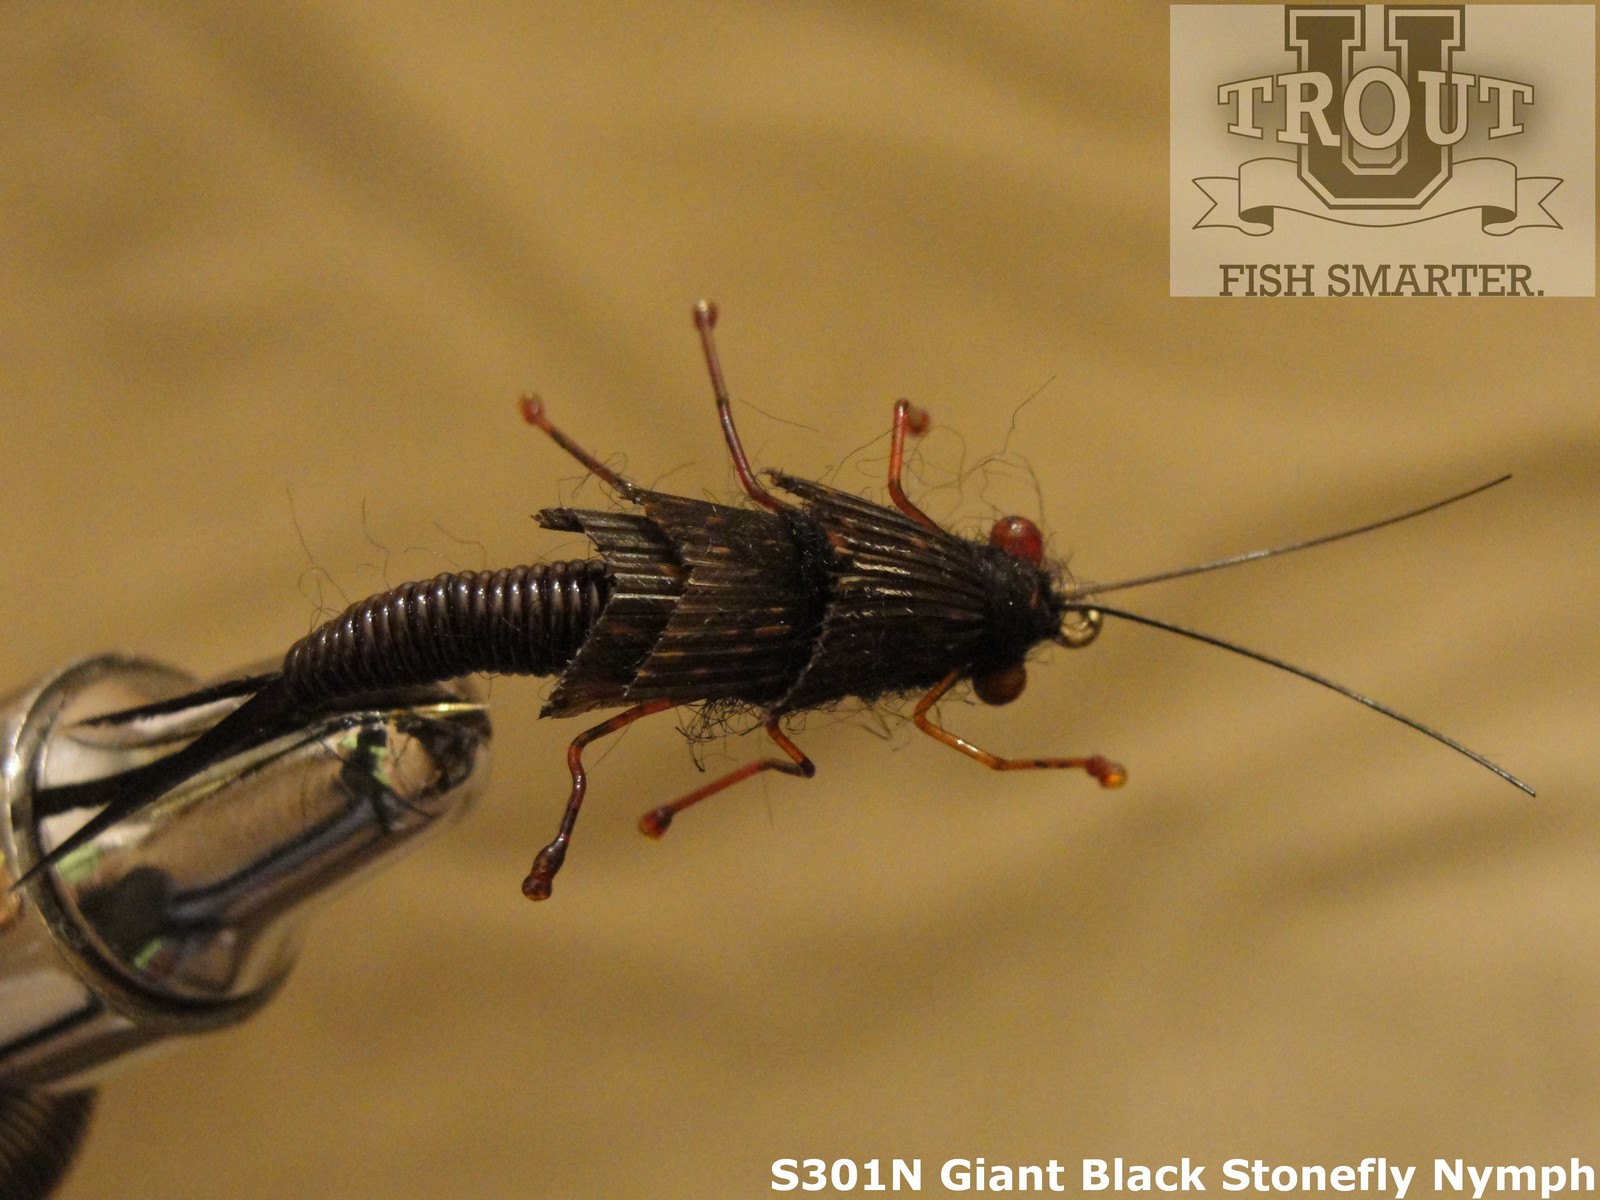 Giant Black Stonefly Nymph